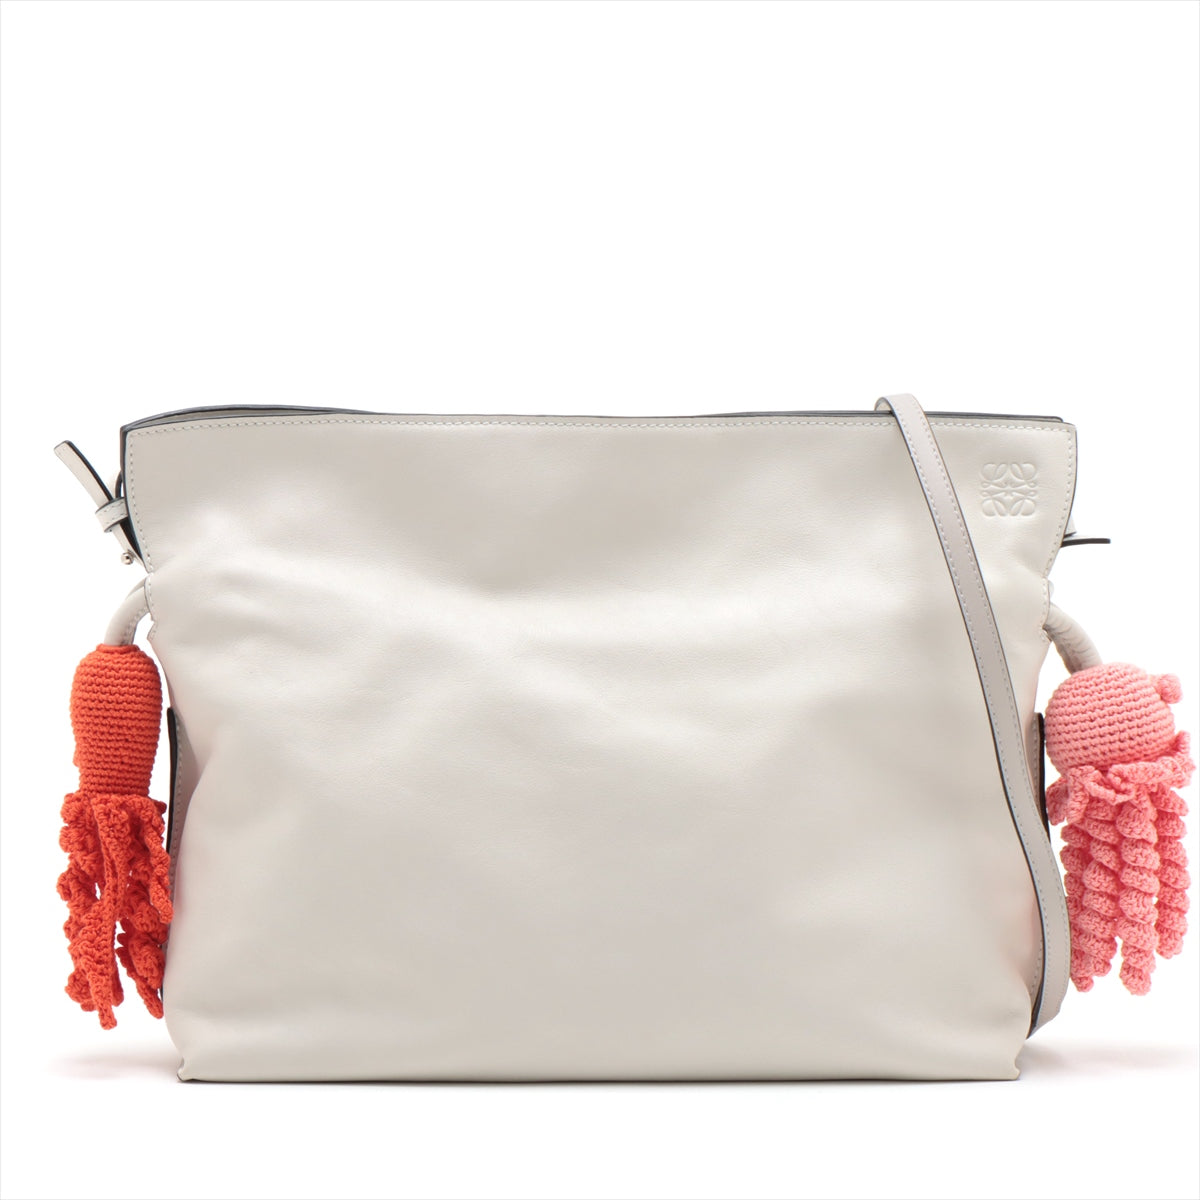 Loewe Flamenco clutch Leather Shoulder bag White octopus